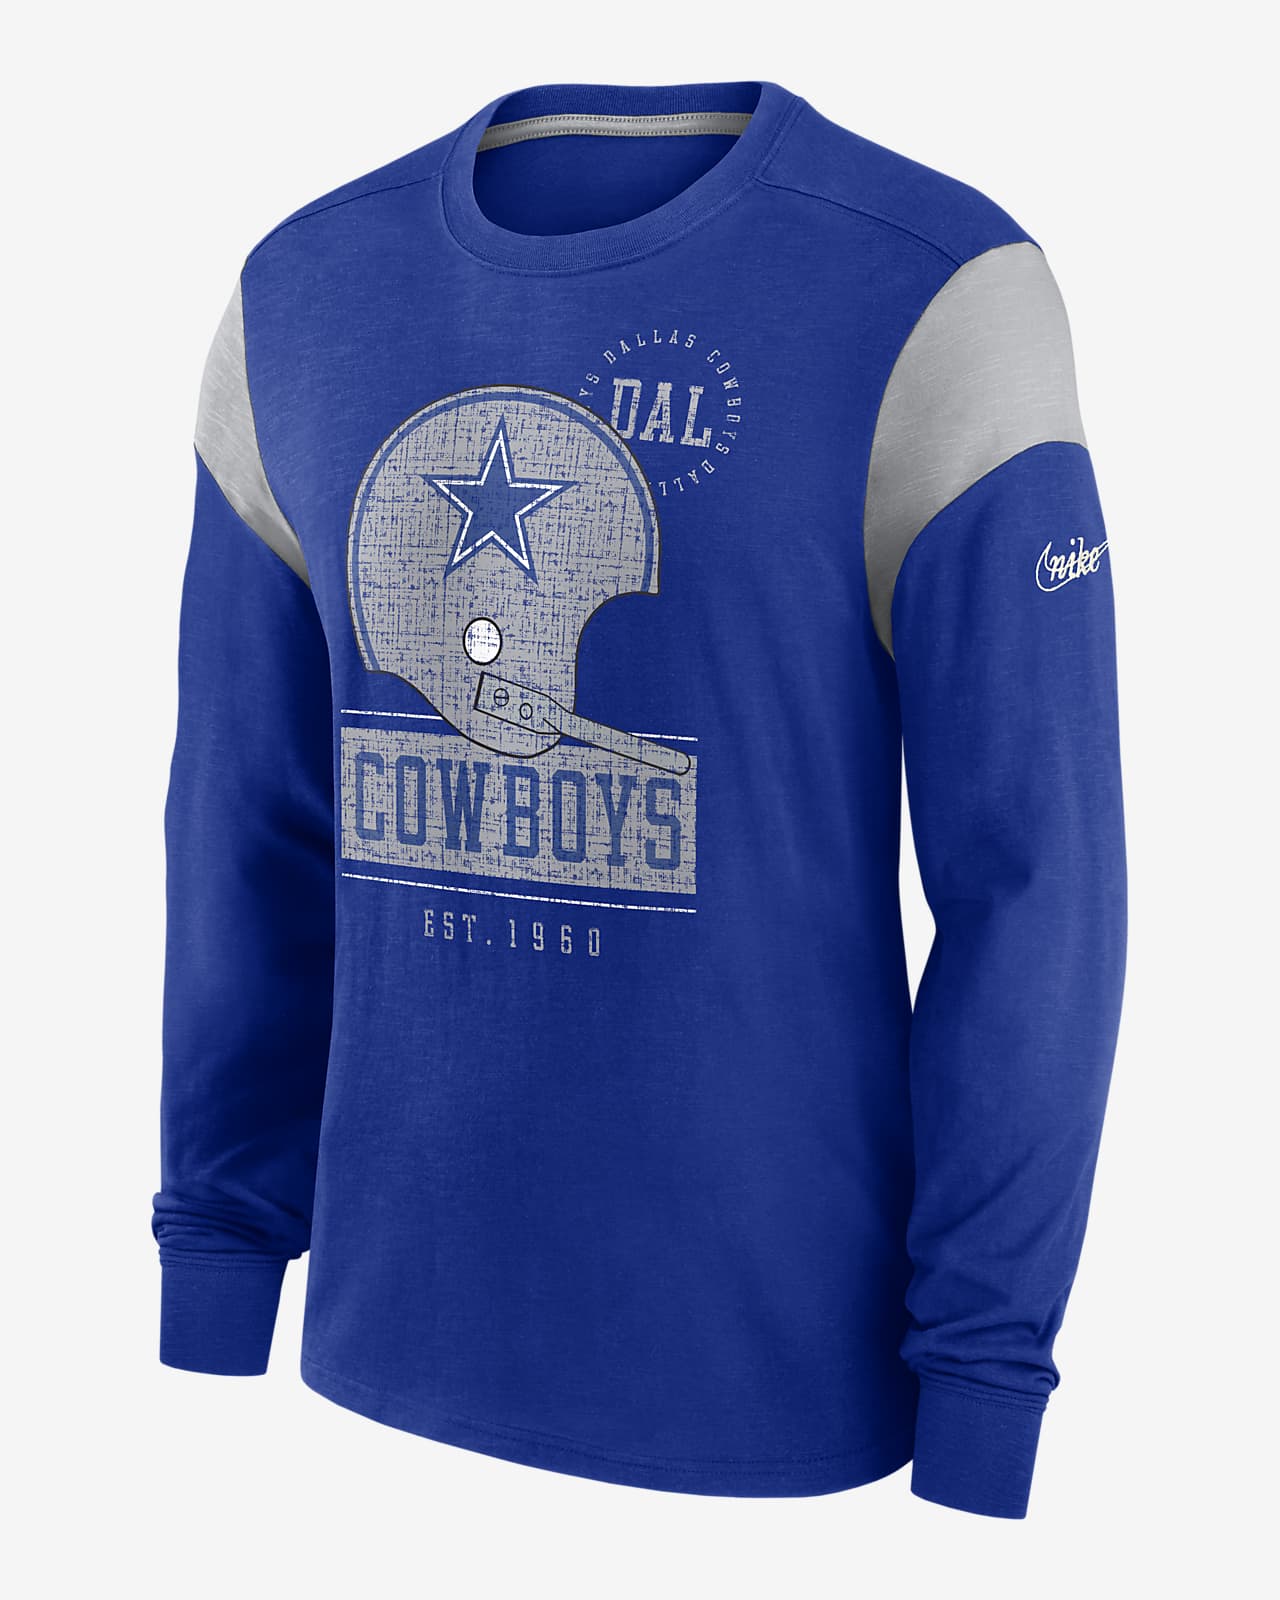 Nike Rewind Playback Helmet (NFL Dallas Cowboys) Men's Long-Sleeve T-Shirt